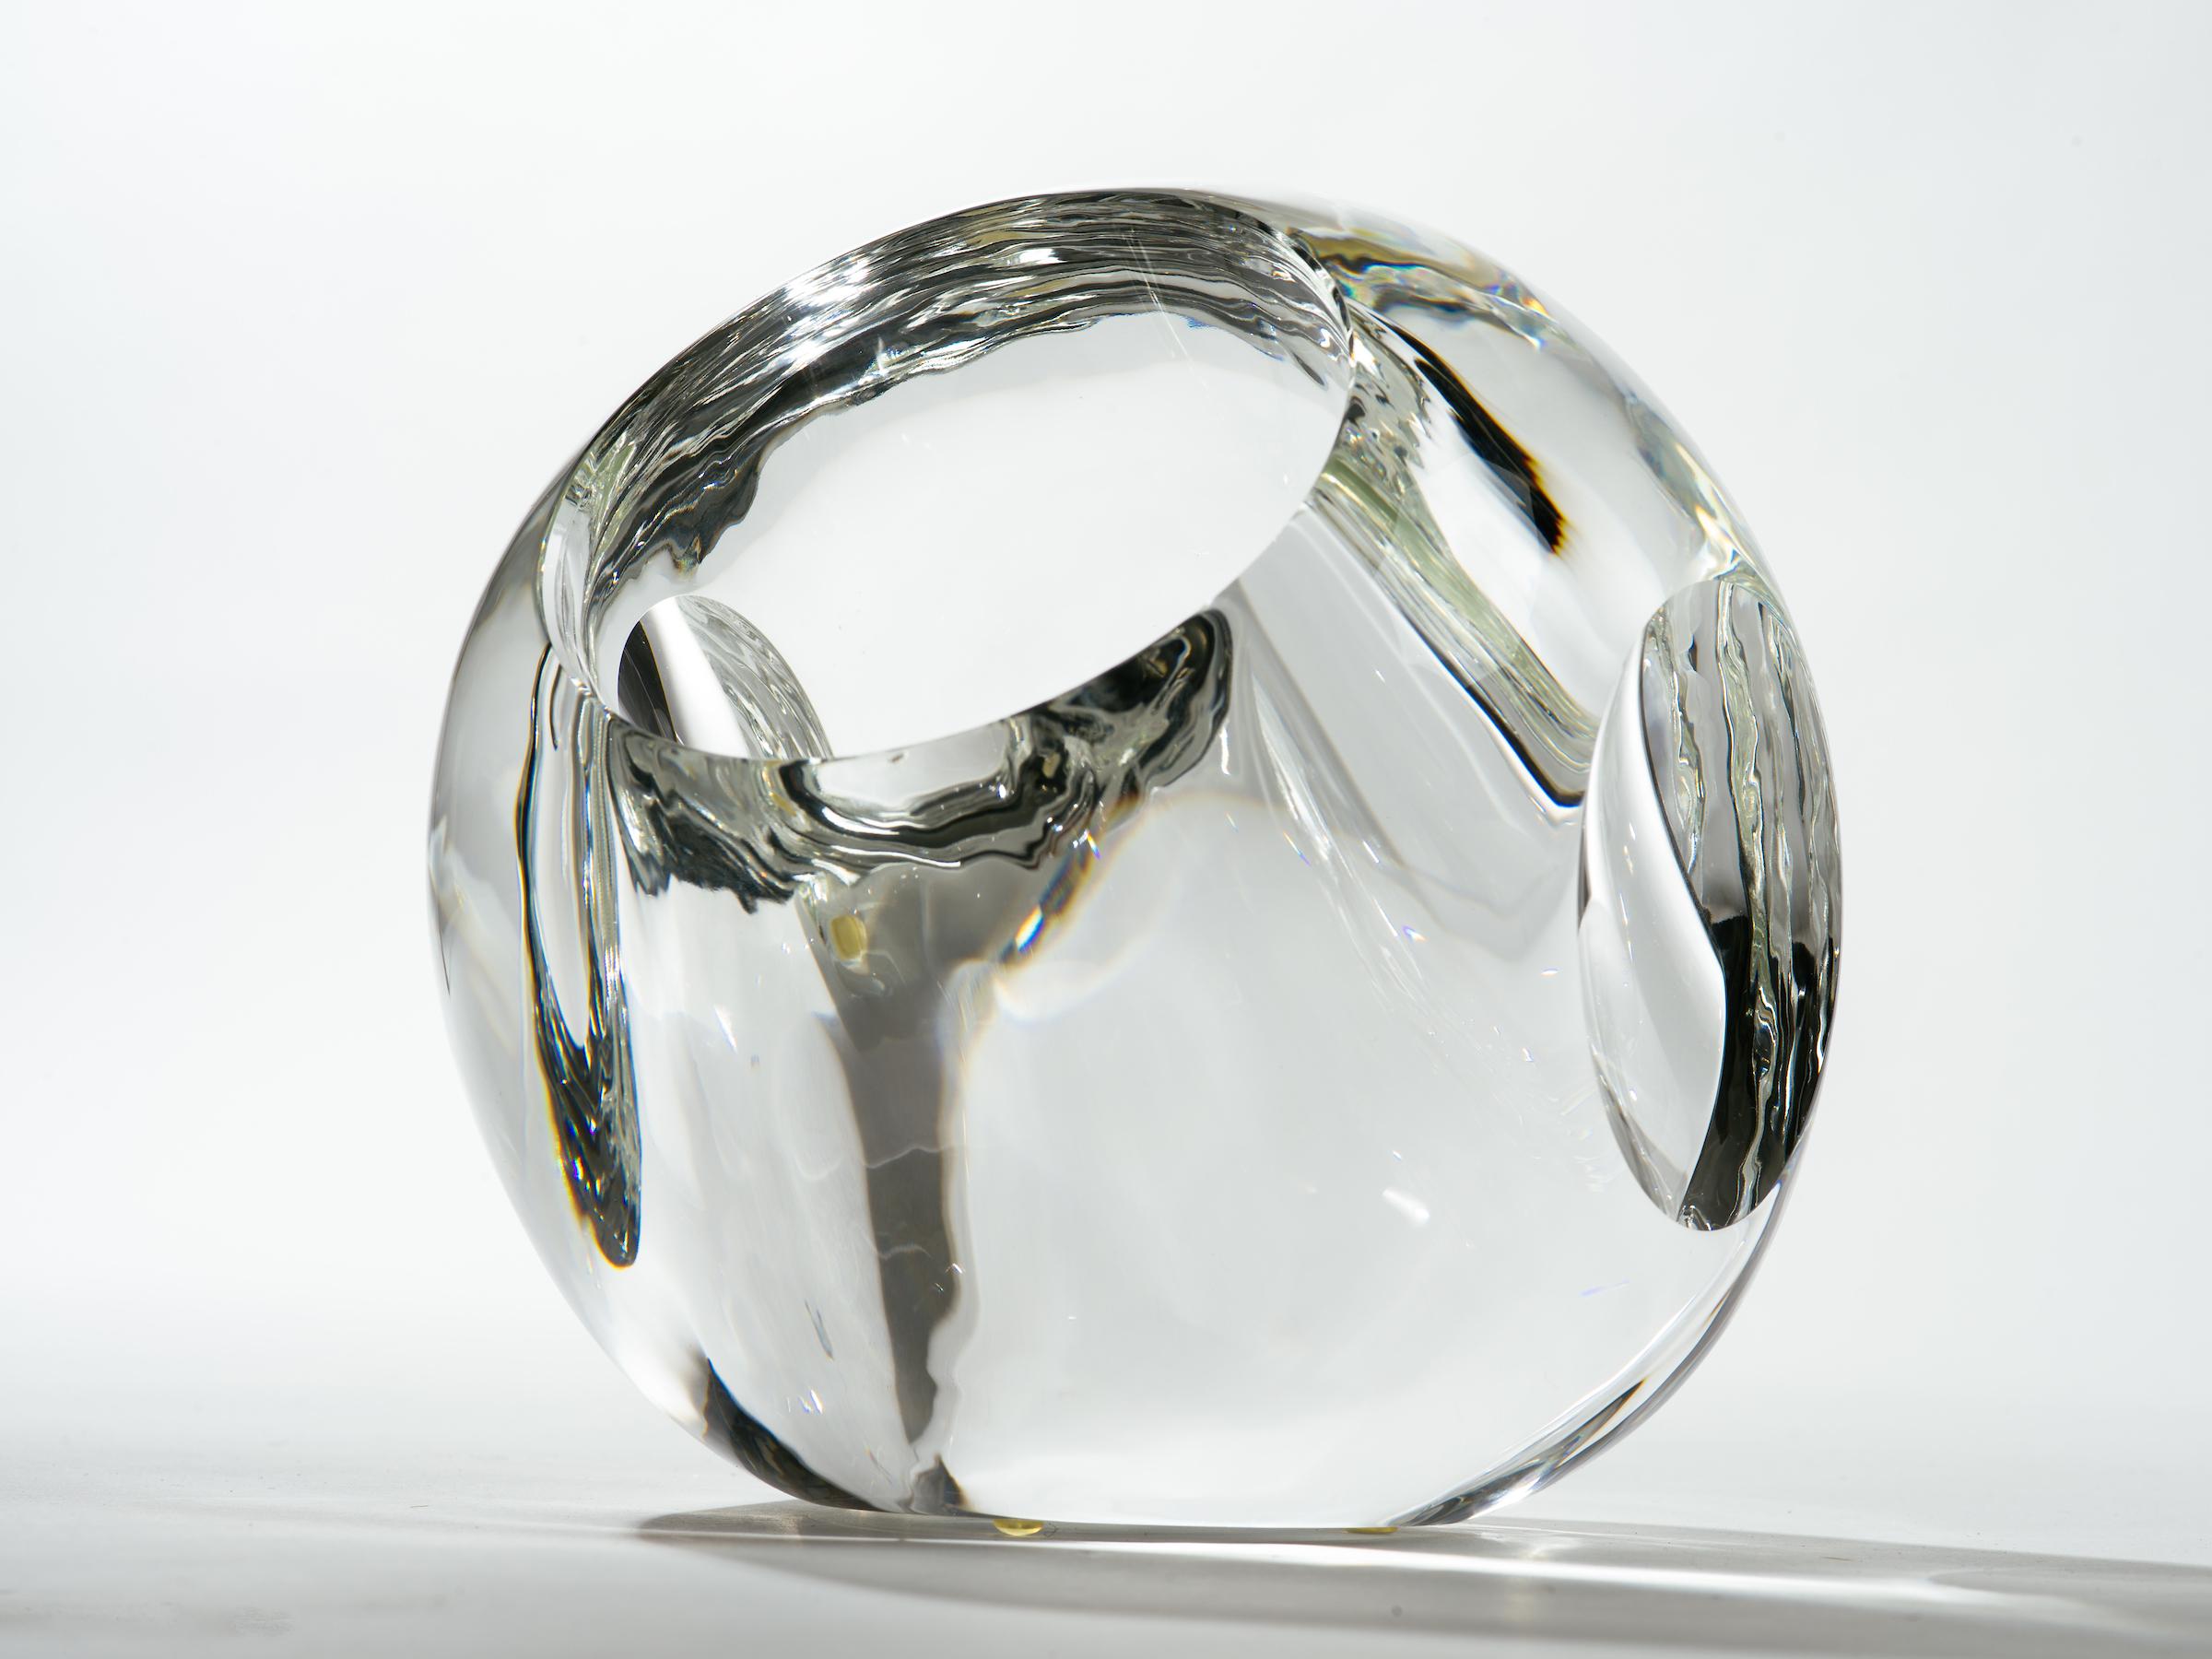 Post-Modern Op Art Engraved Convex Glass Sphere Sculpture Vase